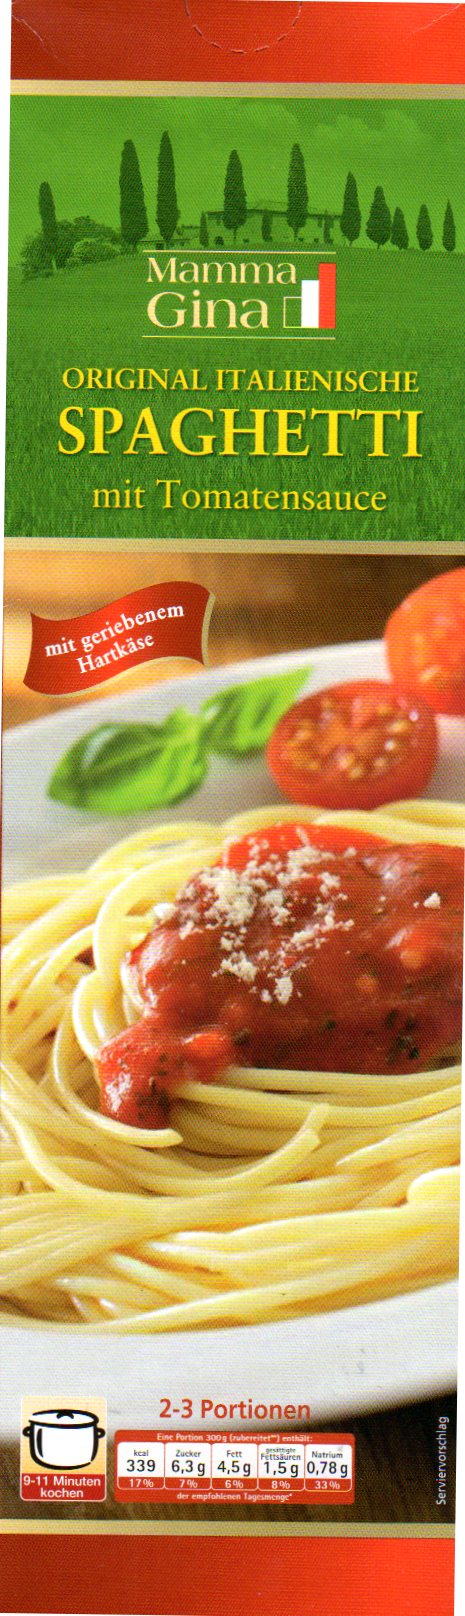 Spaghetti-Gericht Tomate, November 2012